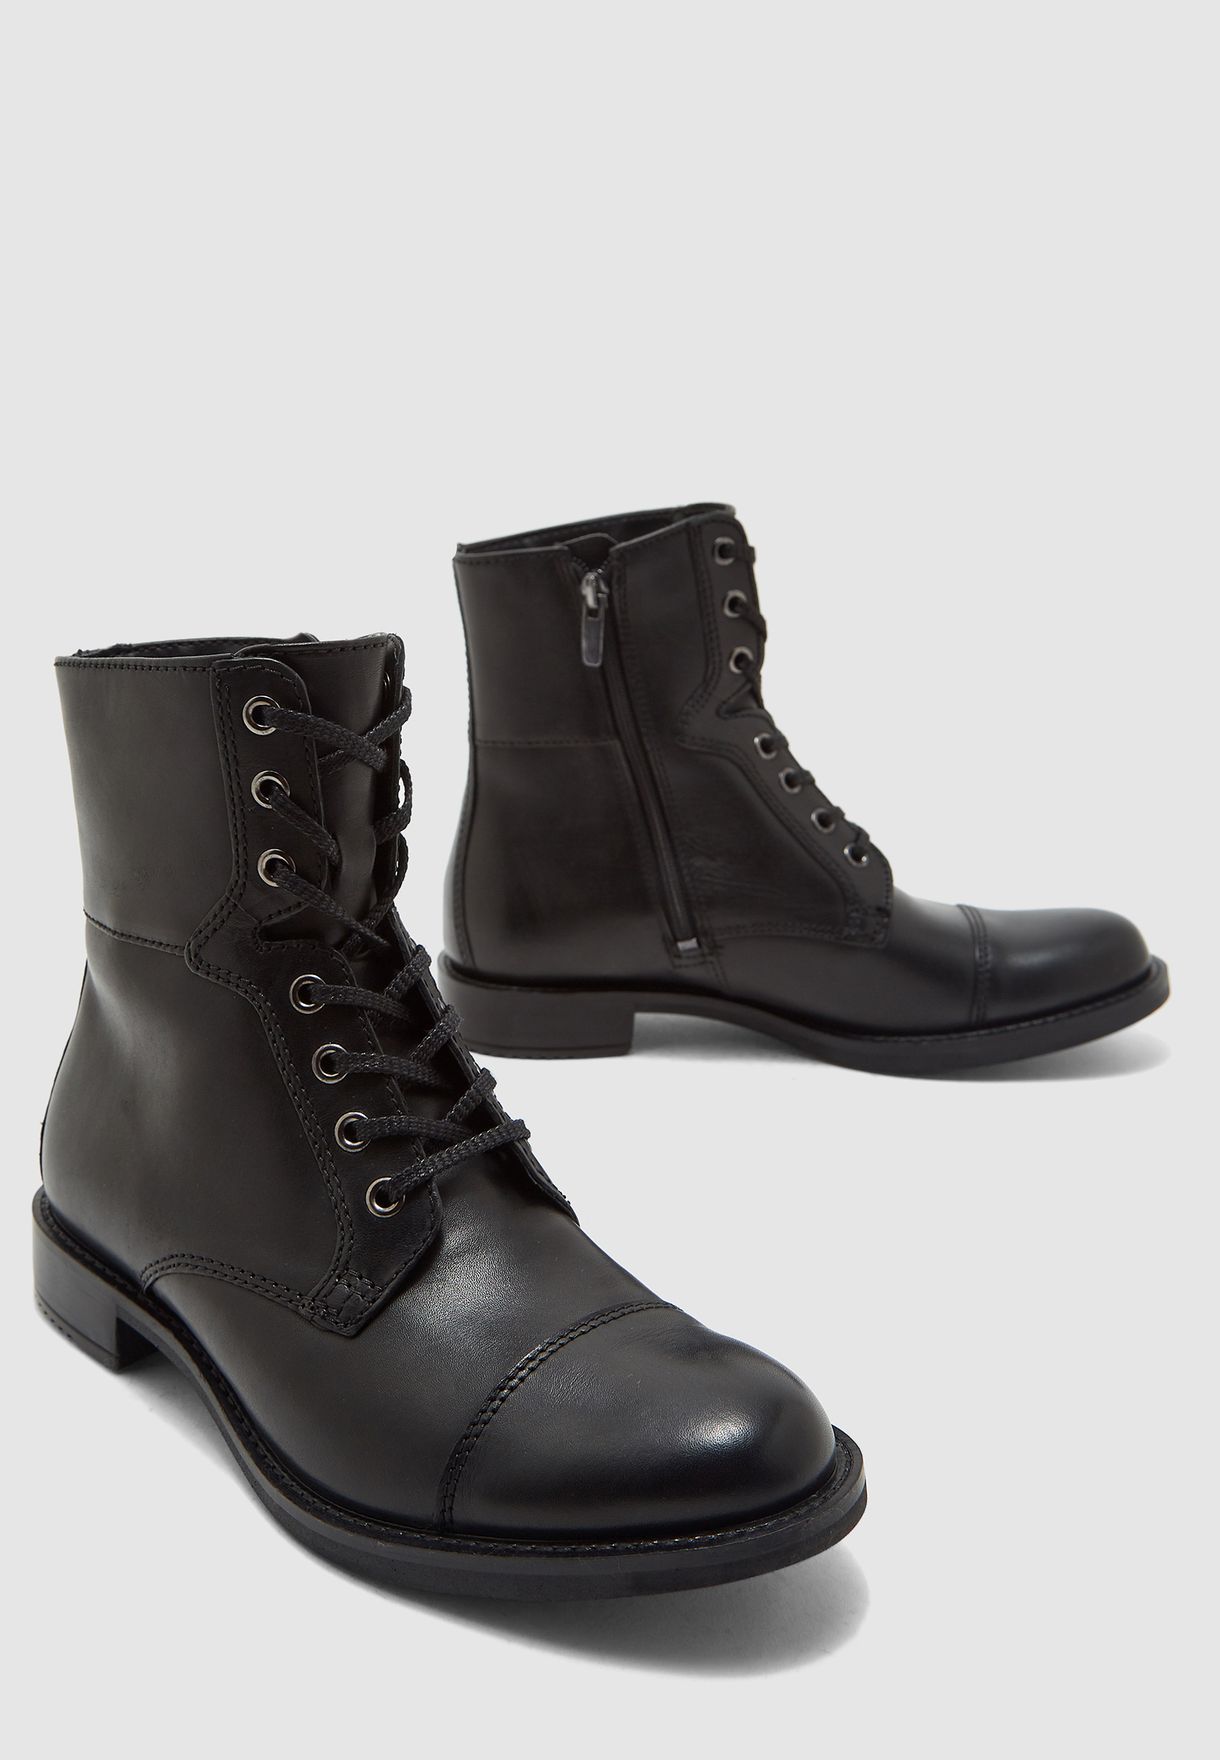 ecco black boots womens